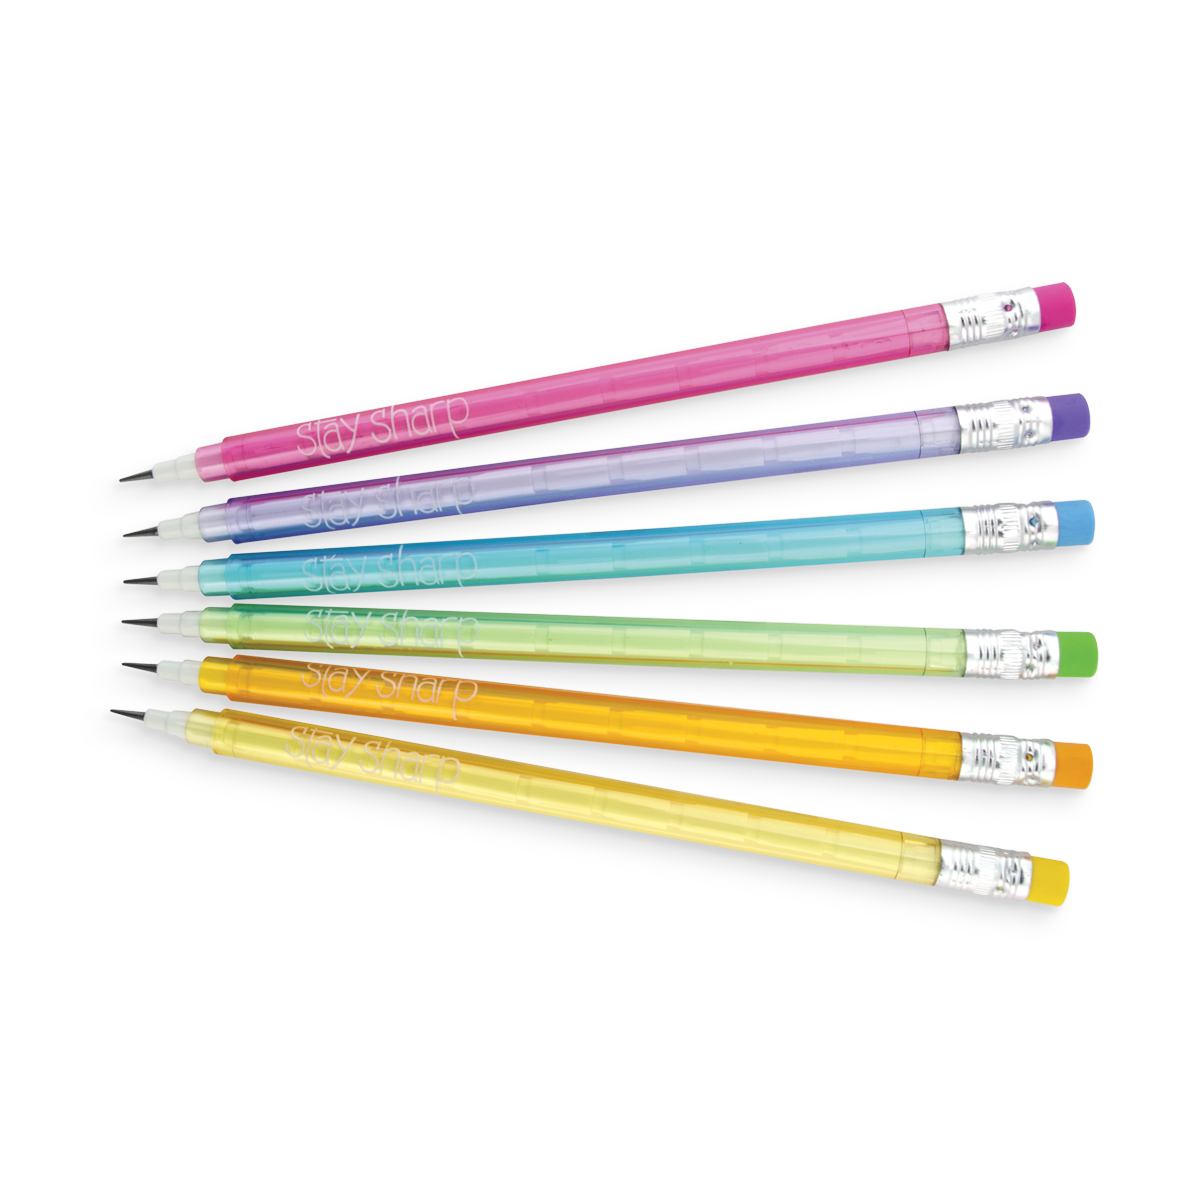 Stay Sharp Rainbow Mechanical Pencils displayed in a fan shape